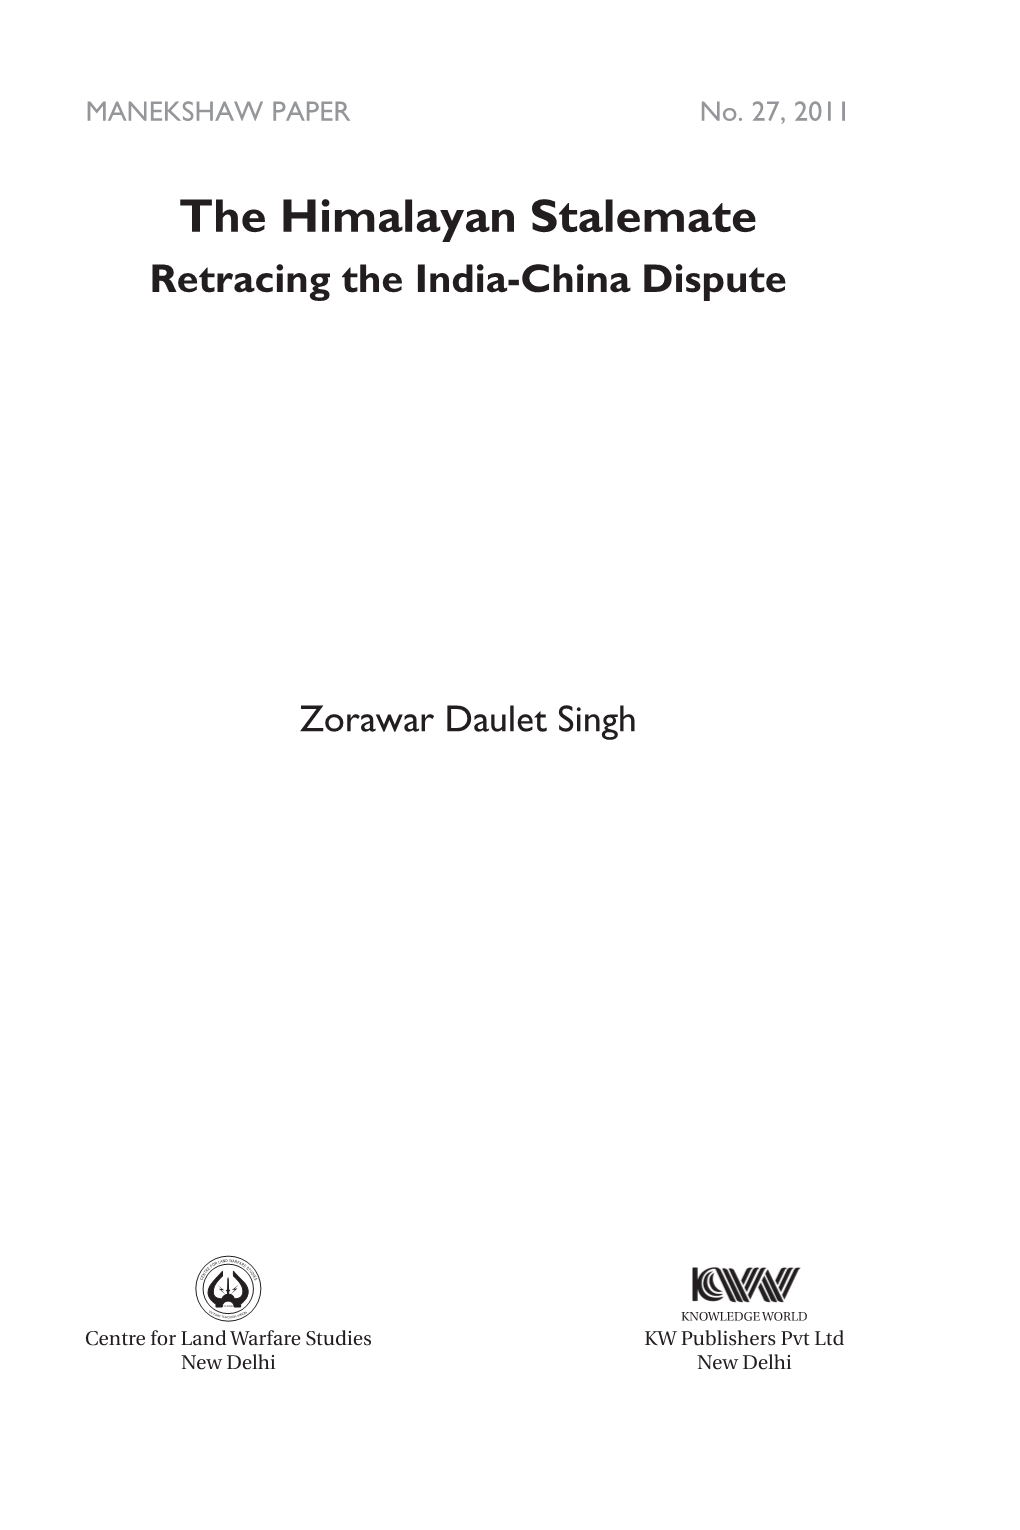 The Himalayan Stalemate: Retracing the India-China Dispute